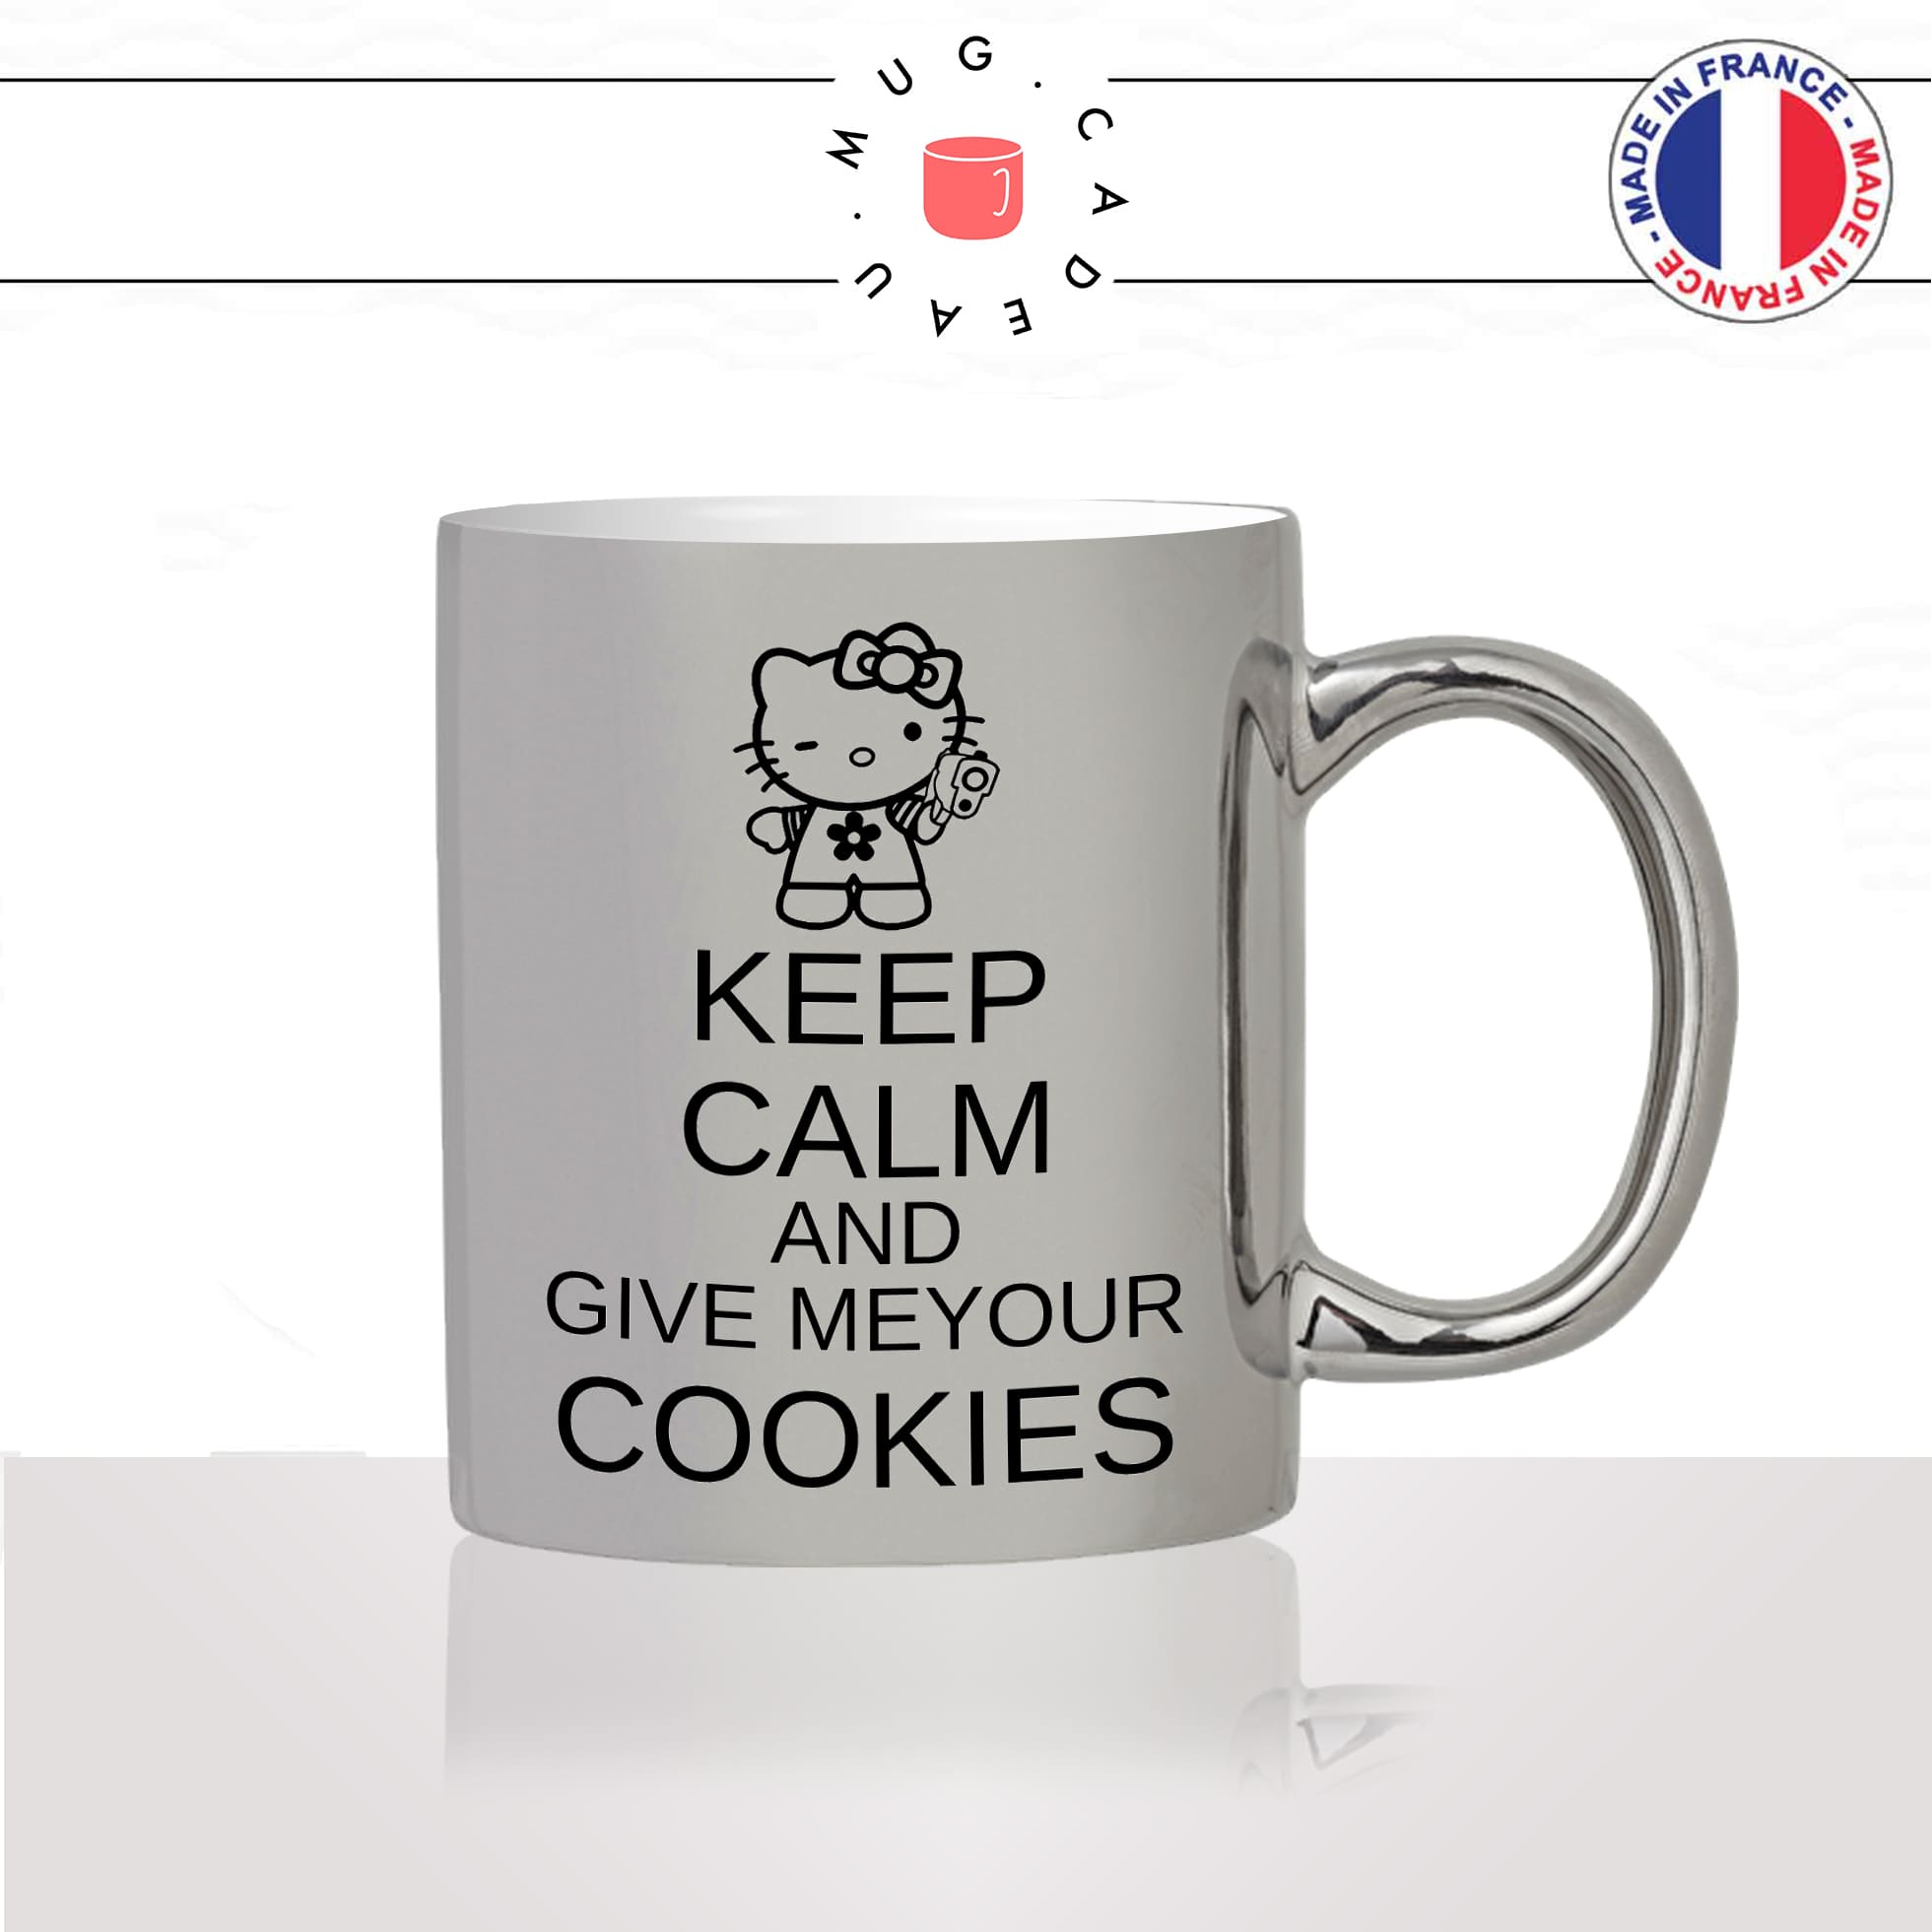 mug-tasse-argent-argenté-silver-keep-calm-and-give-me-your-cookies-hello-kitty-chat-arme-fusil-stylé-humour-idée-cadeau-fun-cool-café-thé2